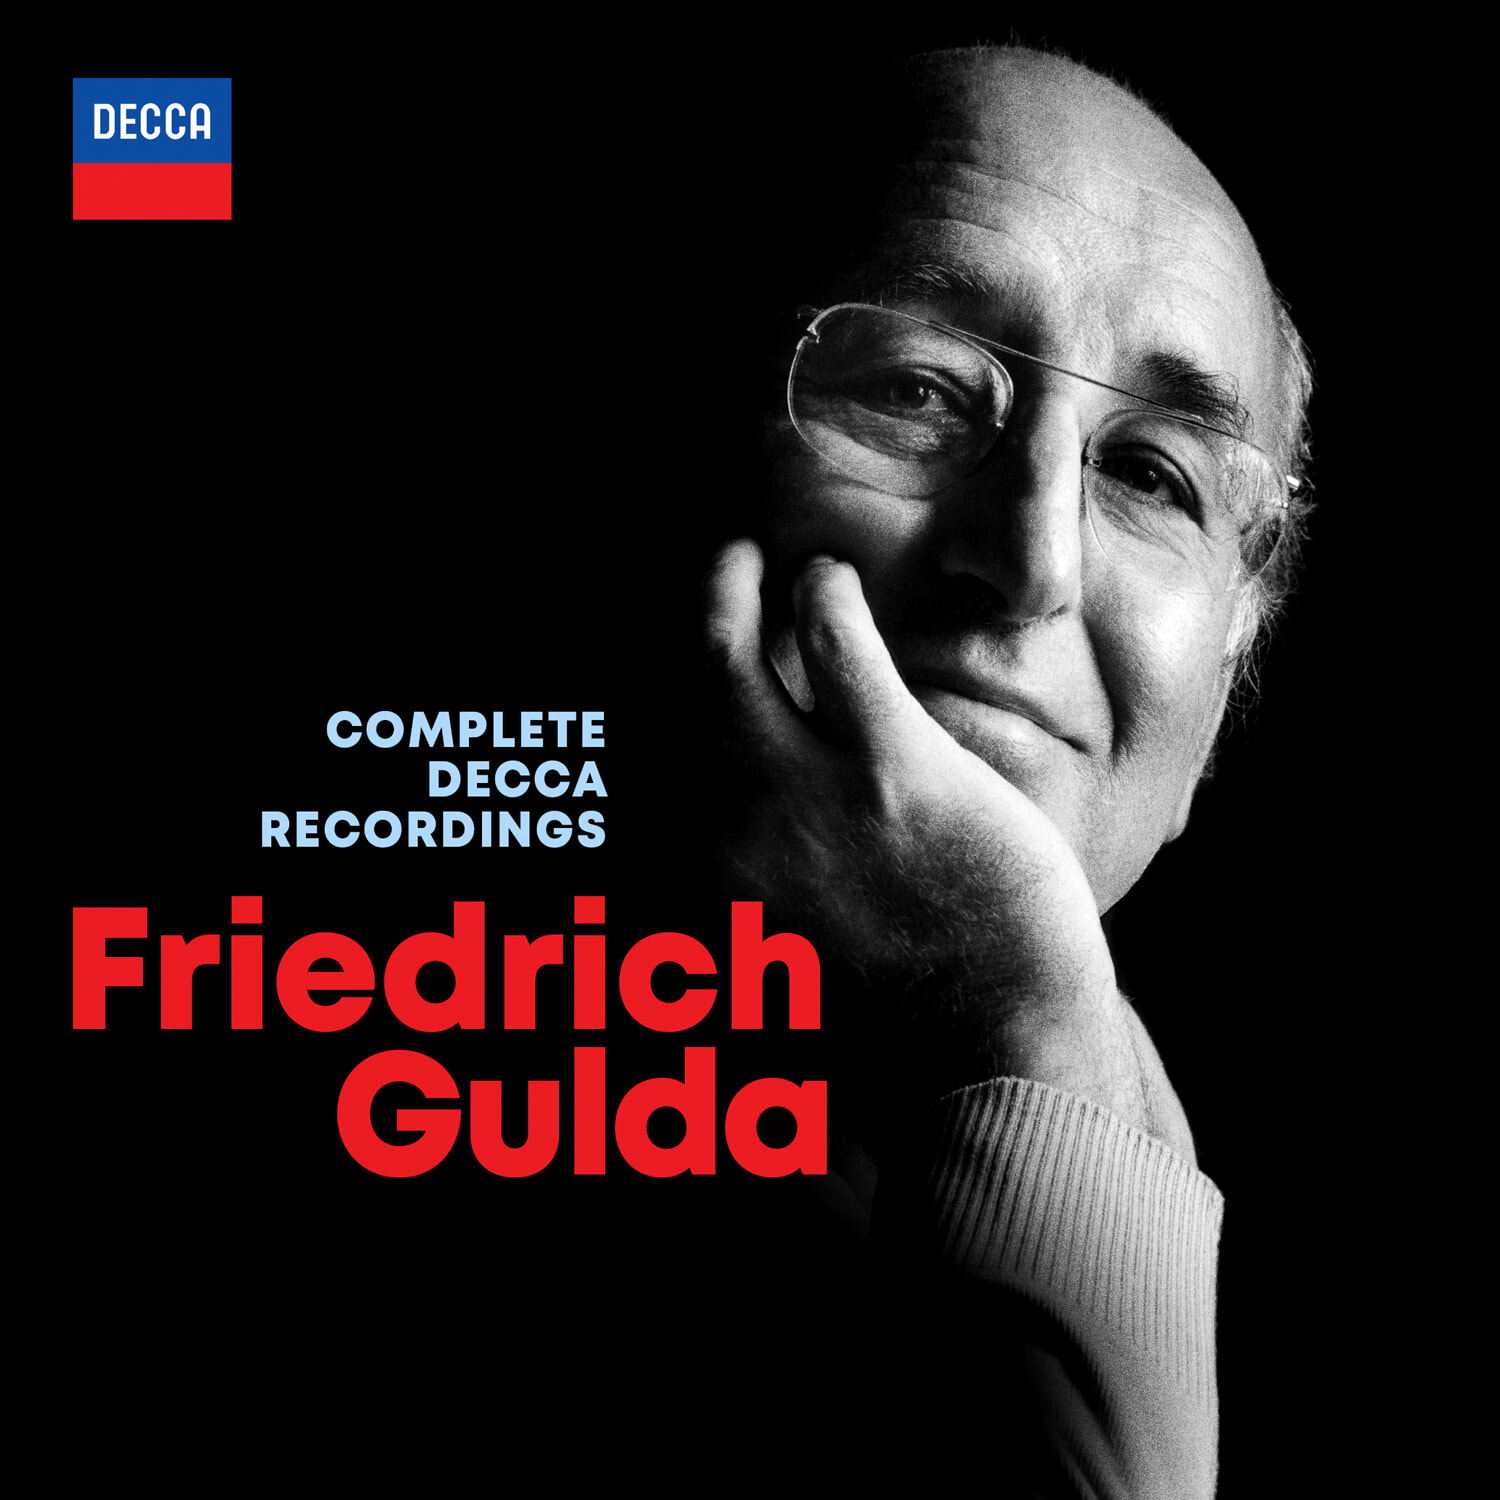 Friedrich Gulda 프리드리히 굴다 데카 레이블 녹음 전집 (Complete Decca Collection) 